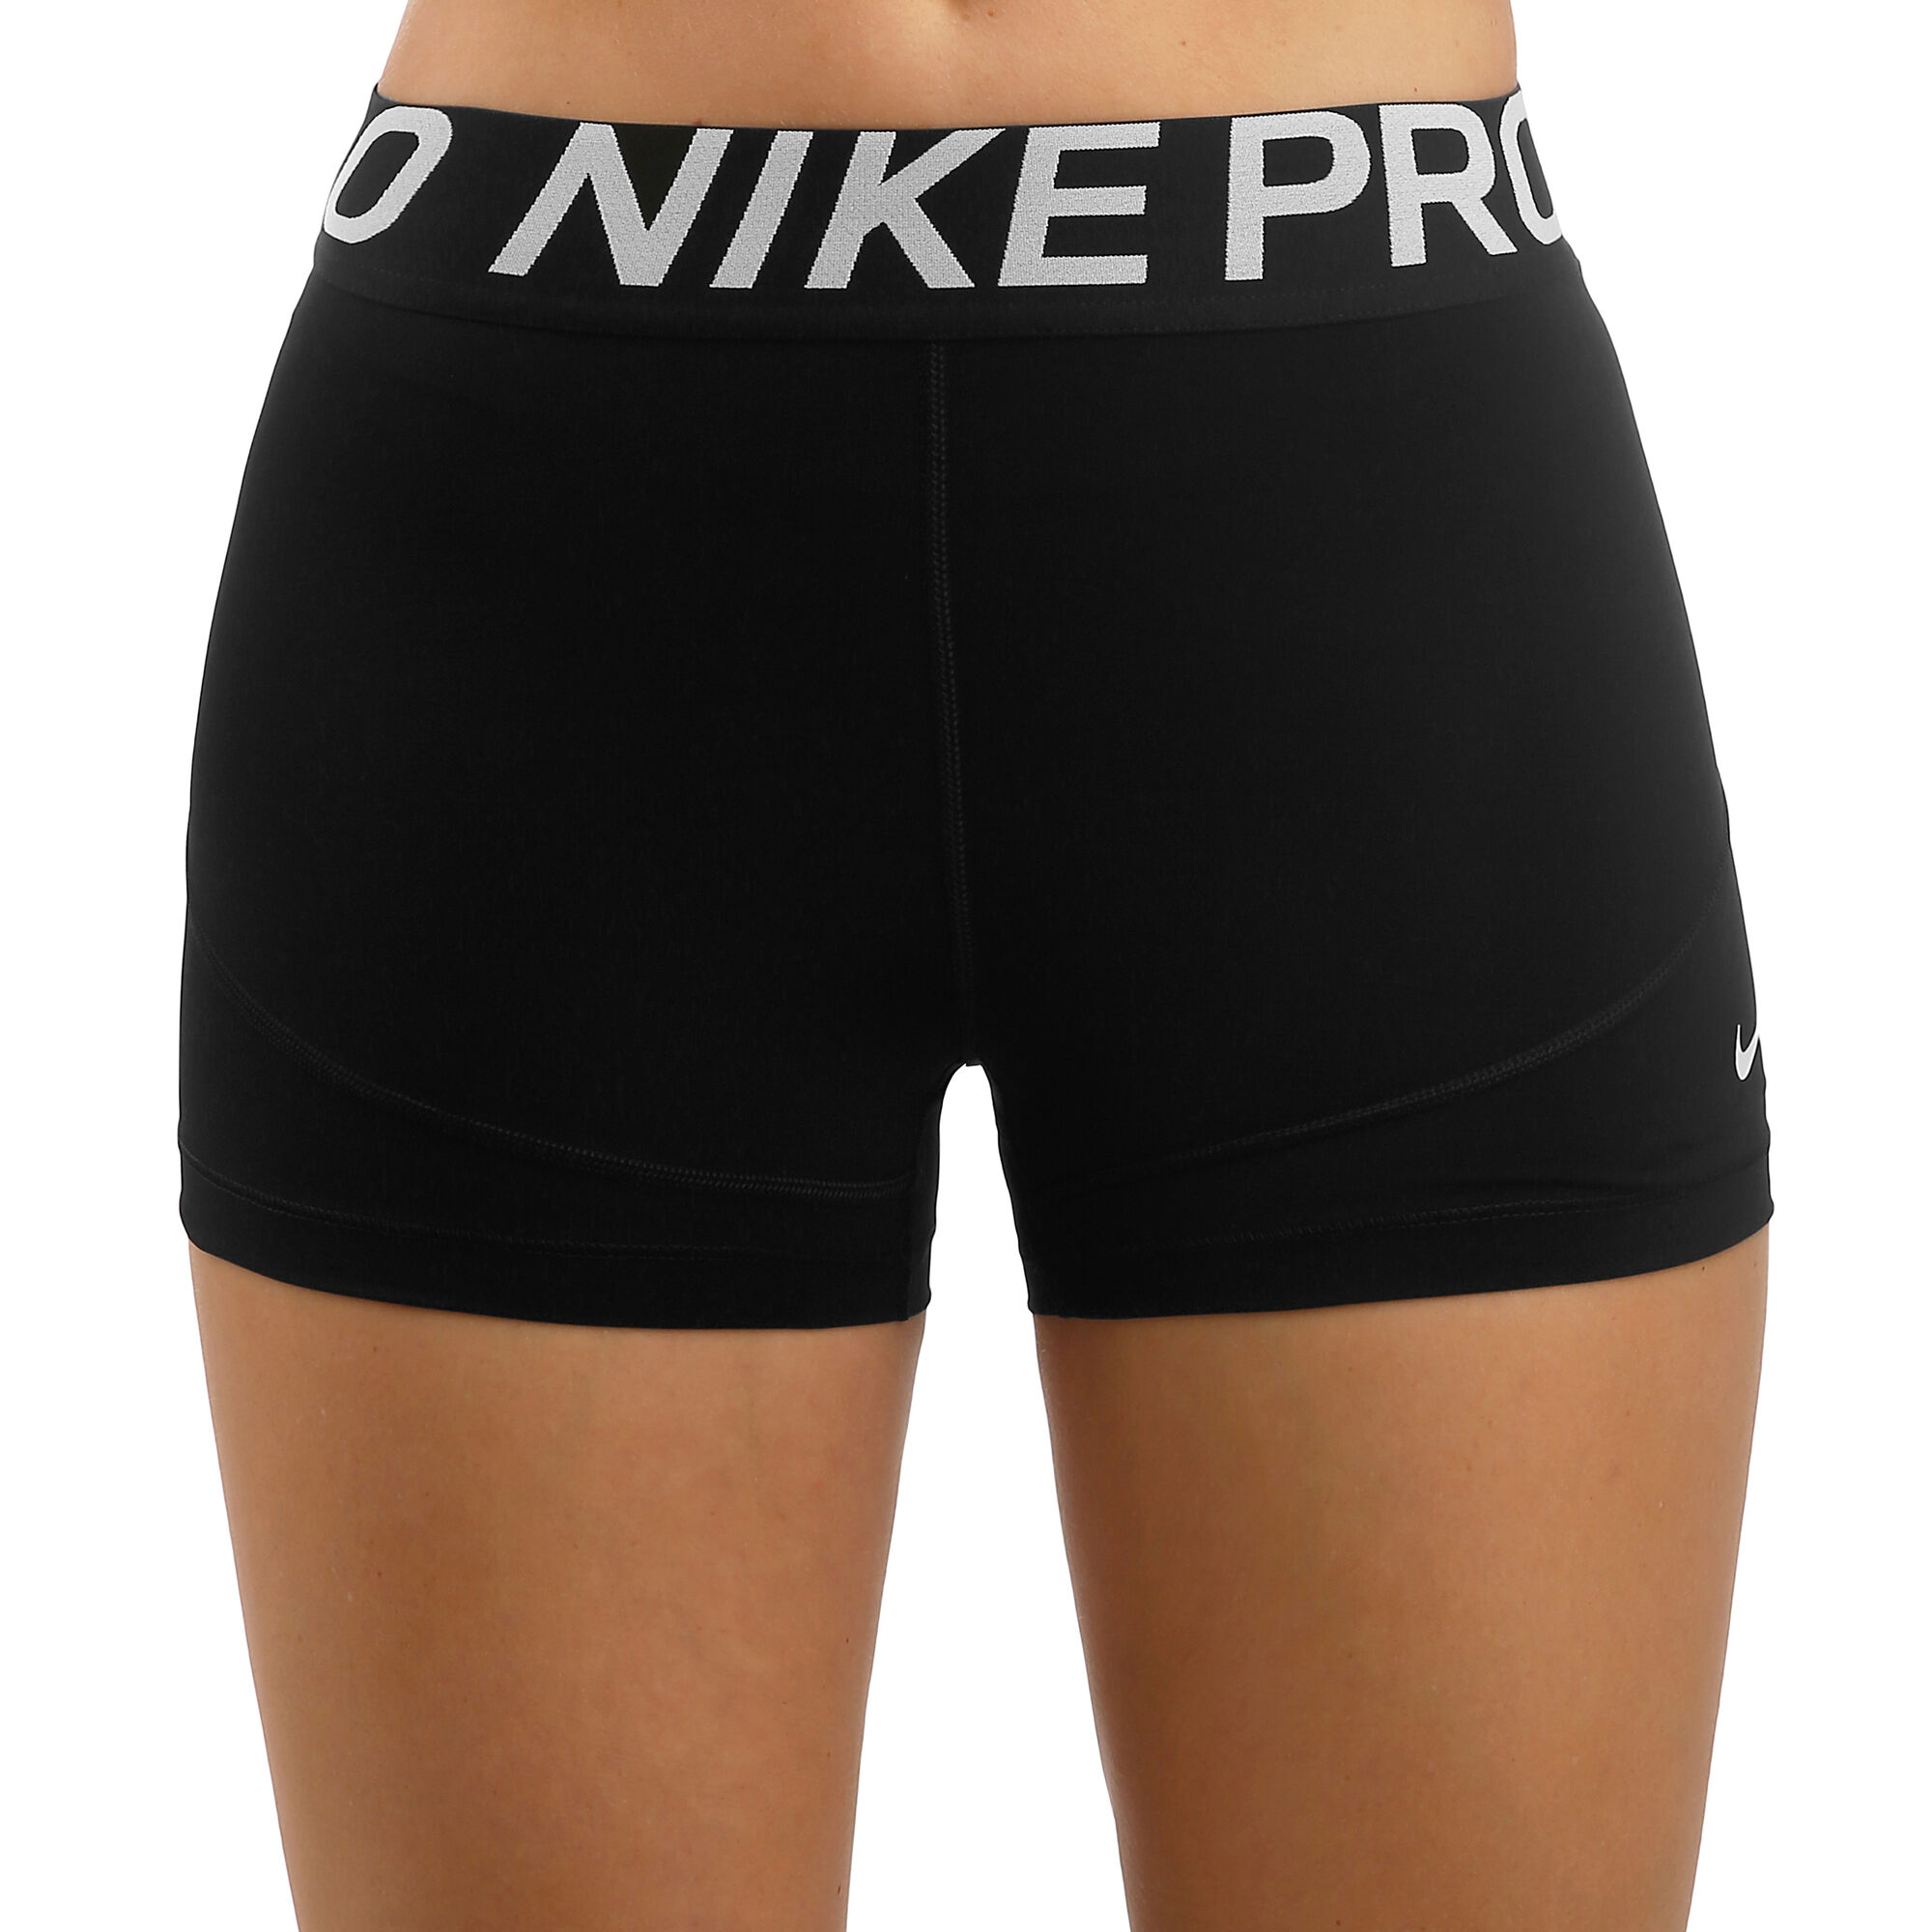 Мяч шортс. Nike Pro шорты. Nike womanshort Black White.